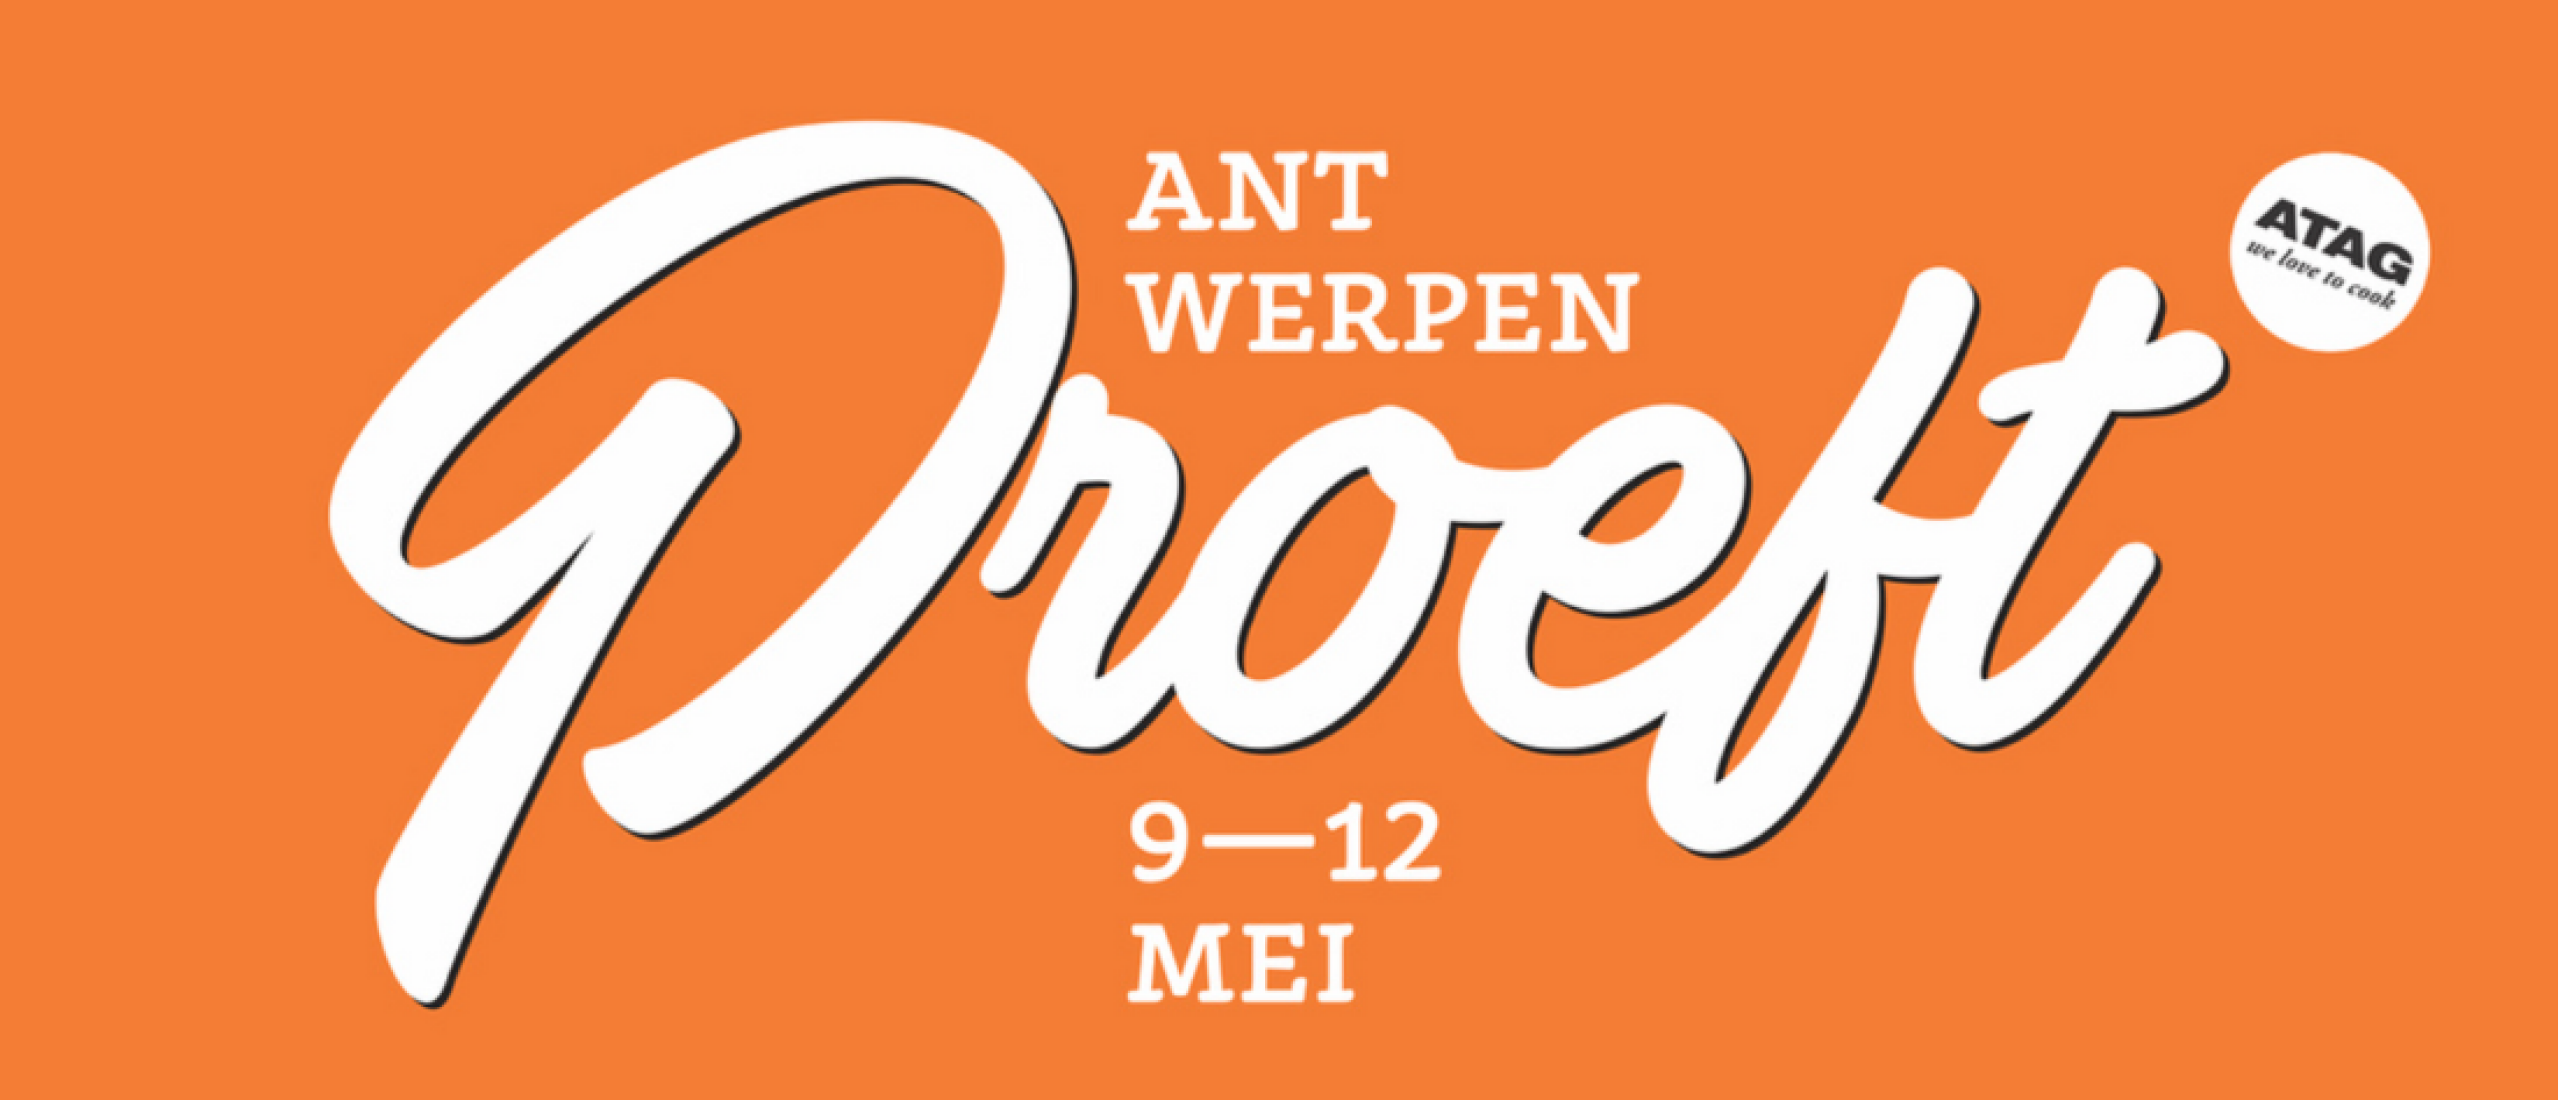 16e editie van culinair festival Antwerpen Proeft zonovergoten.